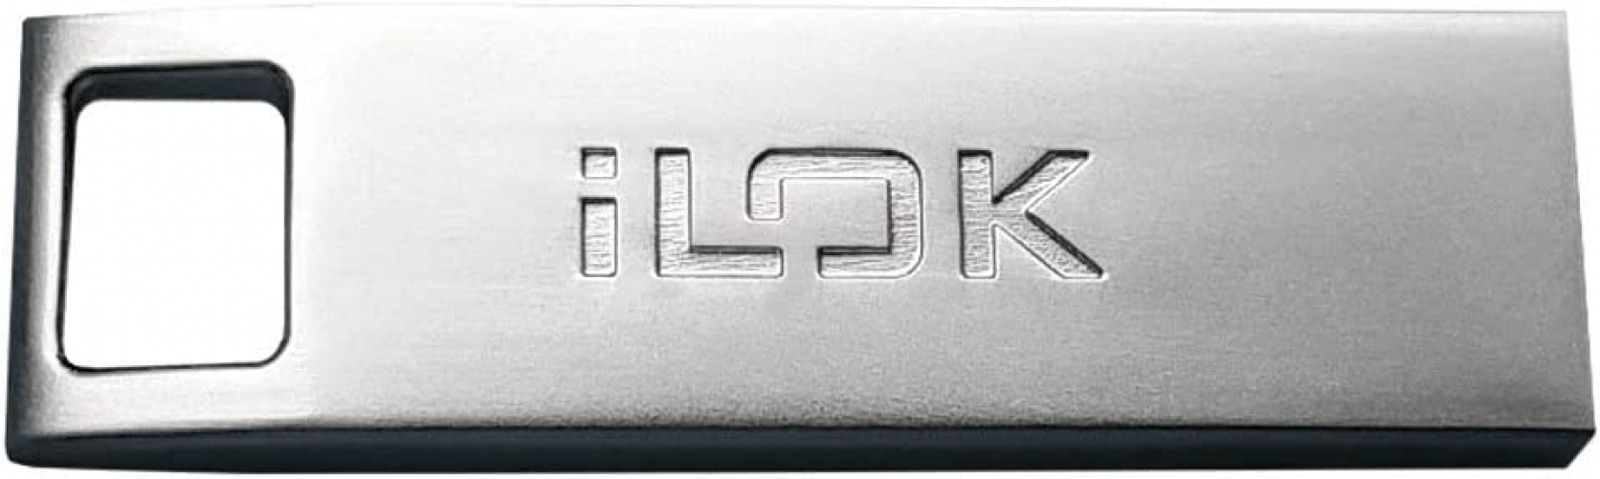 PACE iLok3 USB Key Software Strong Silver Authorization Device Original Version